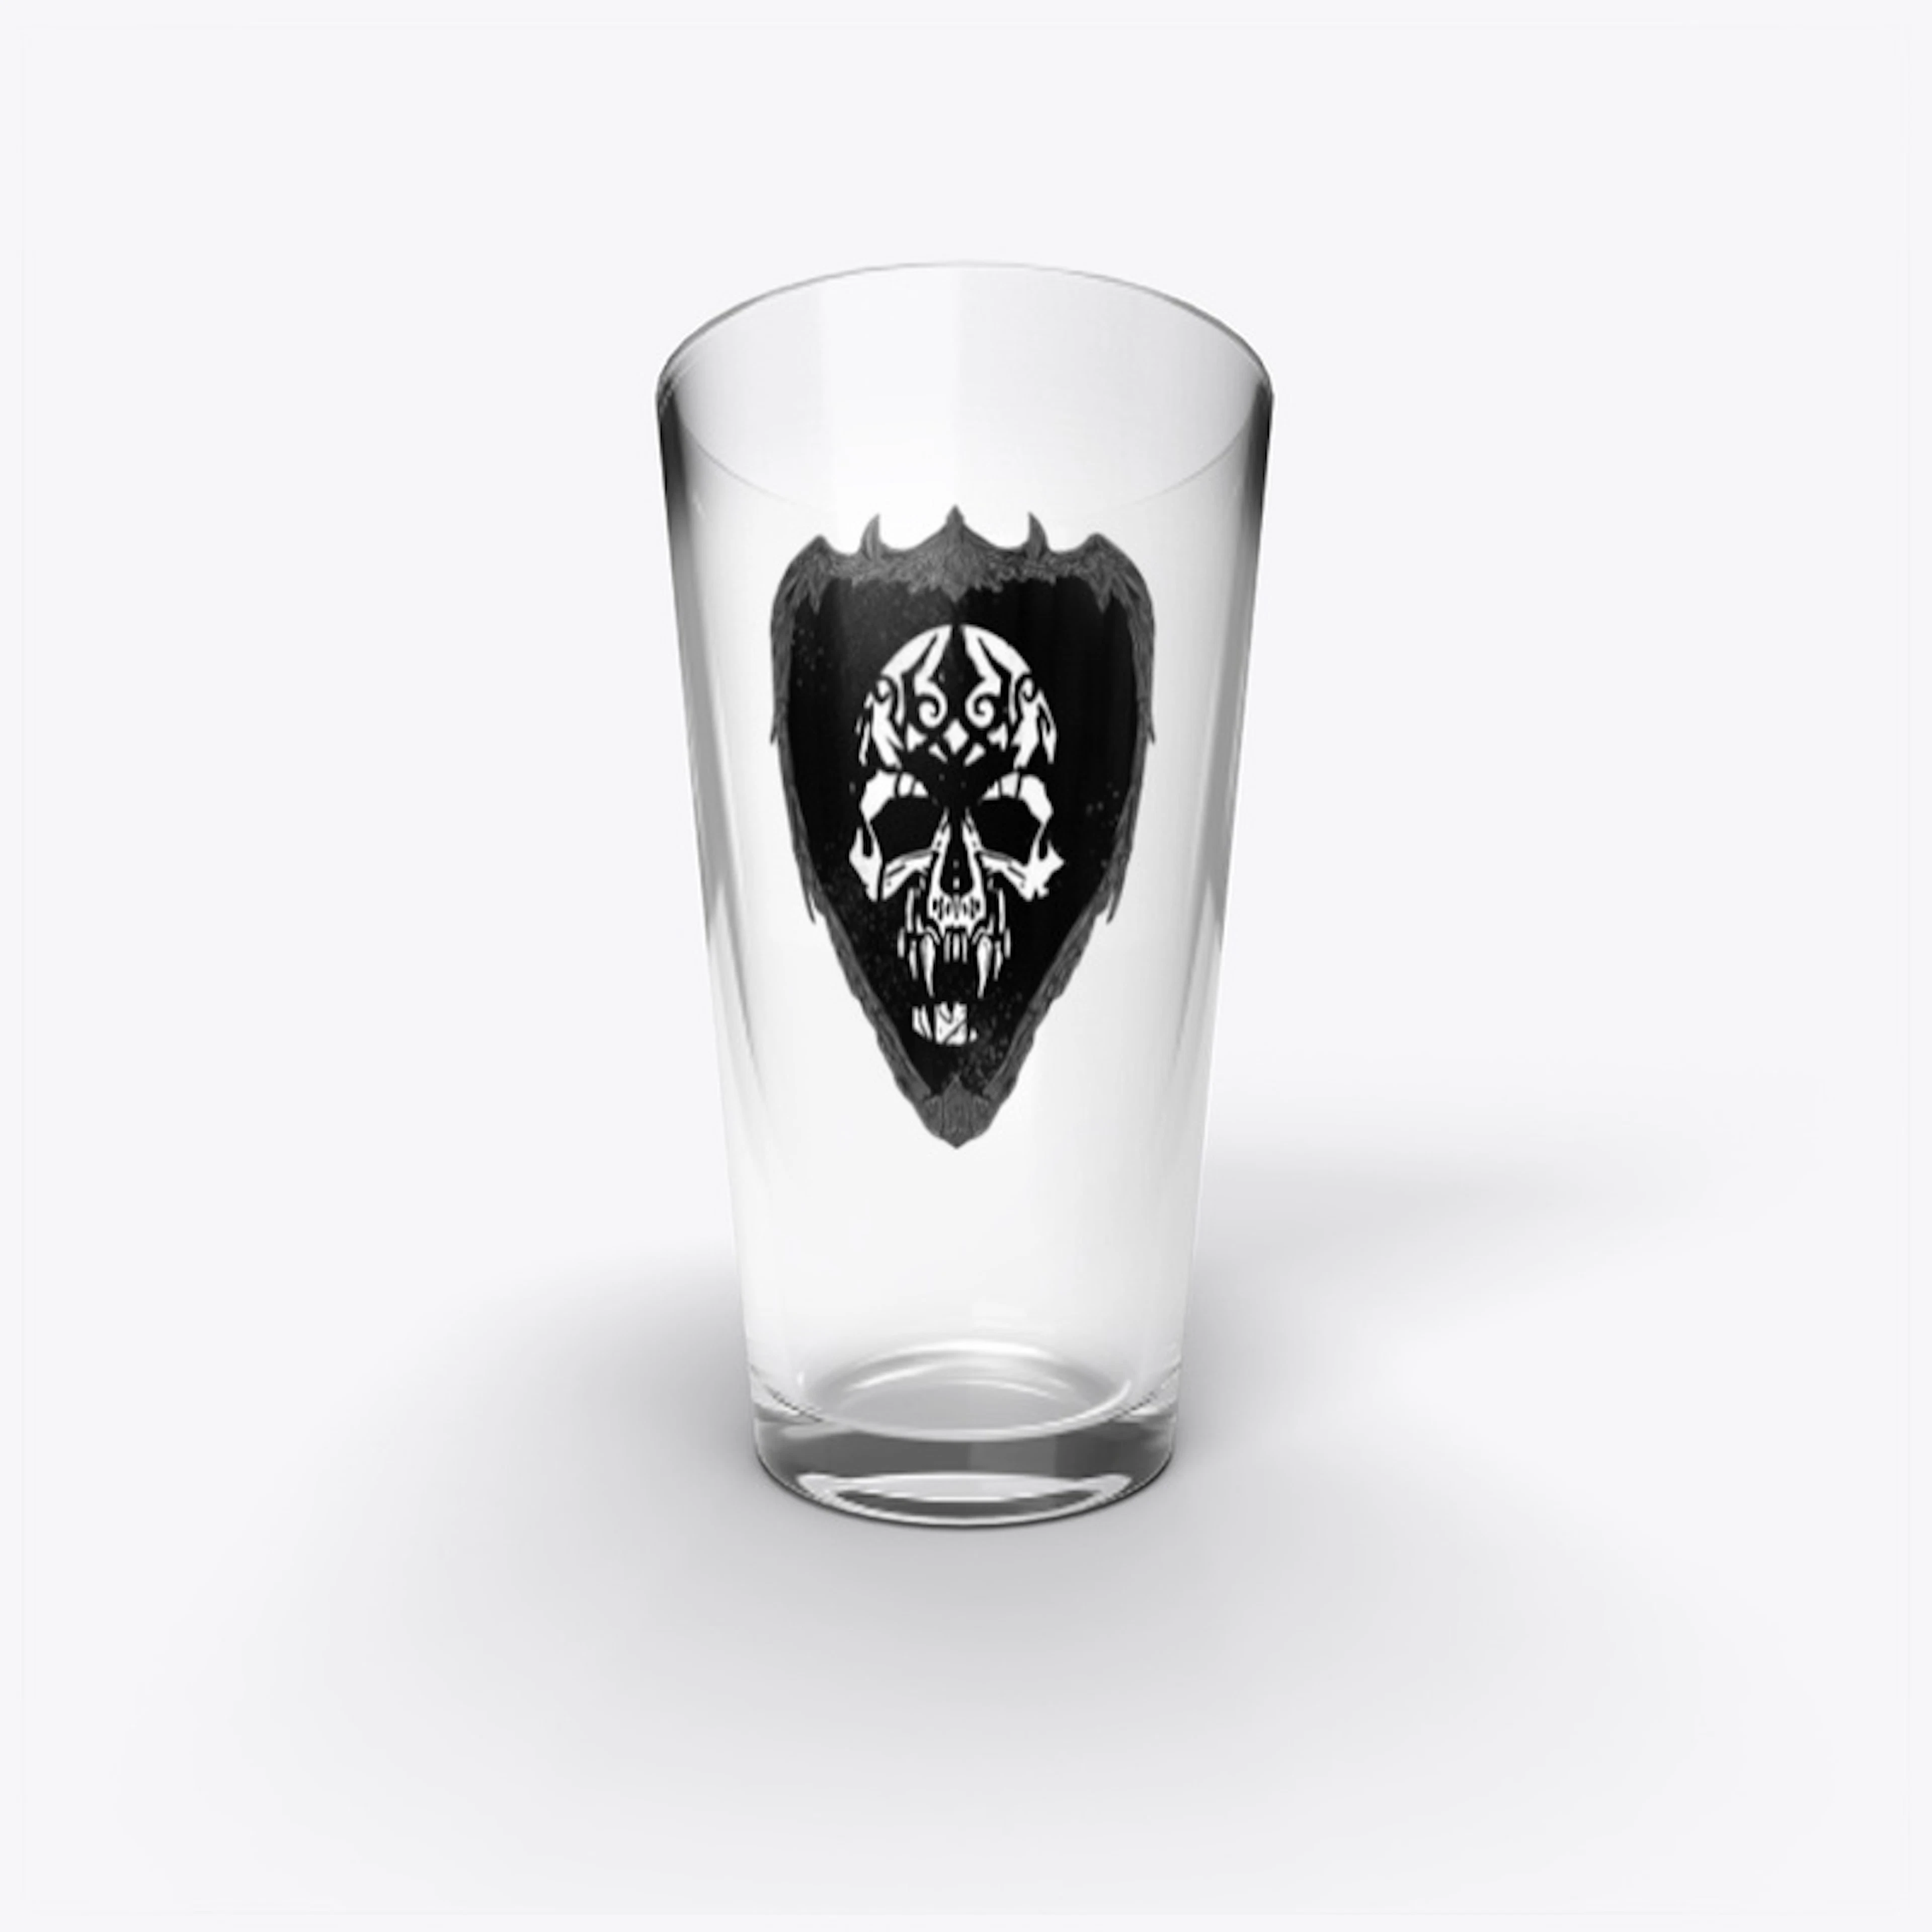 The Holy Legion Pint Glass